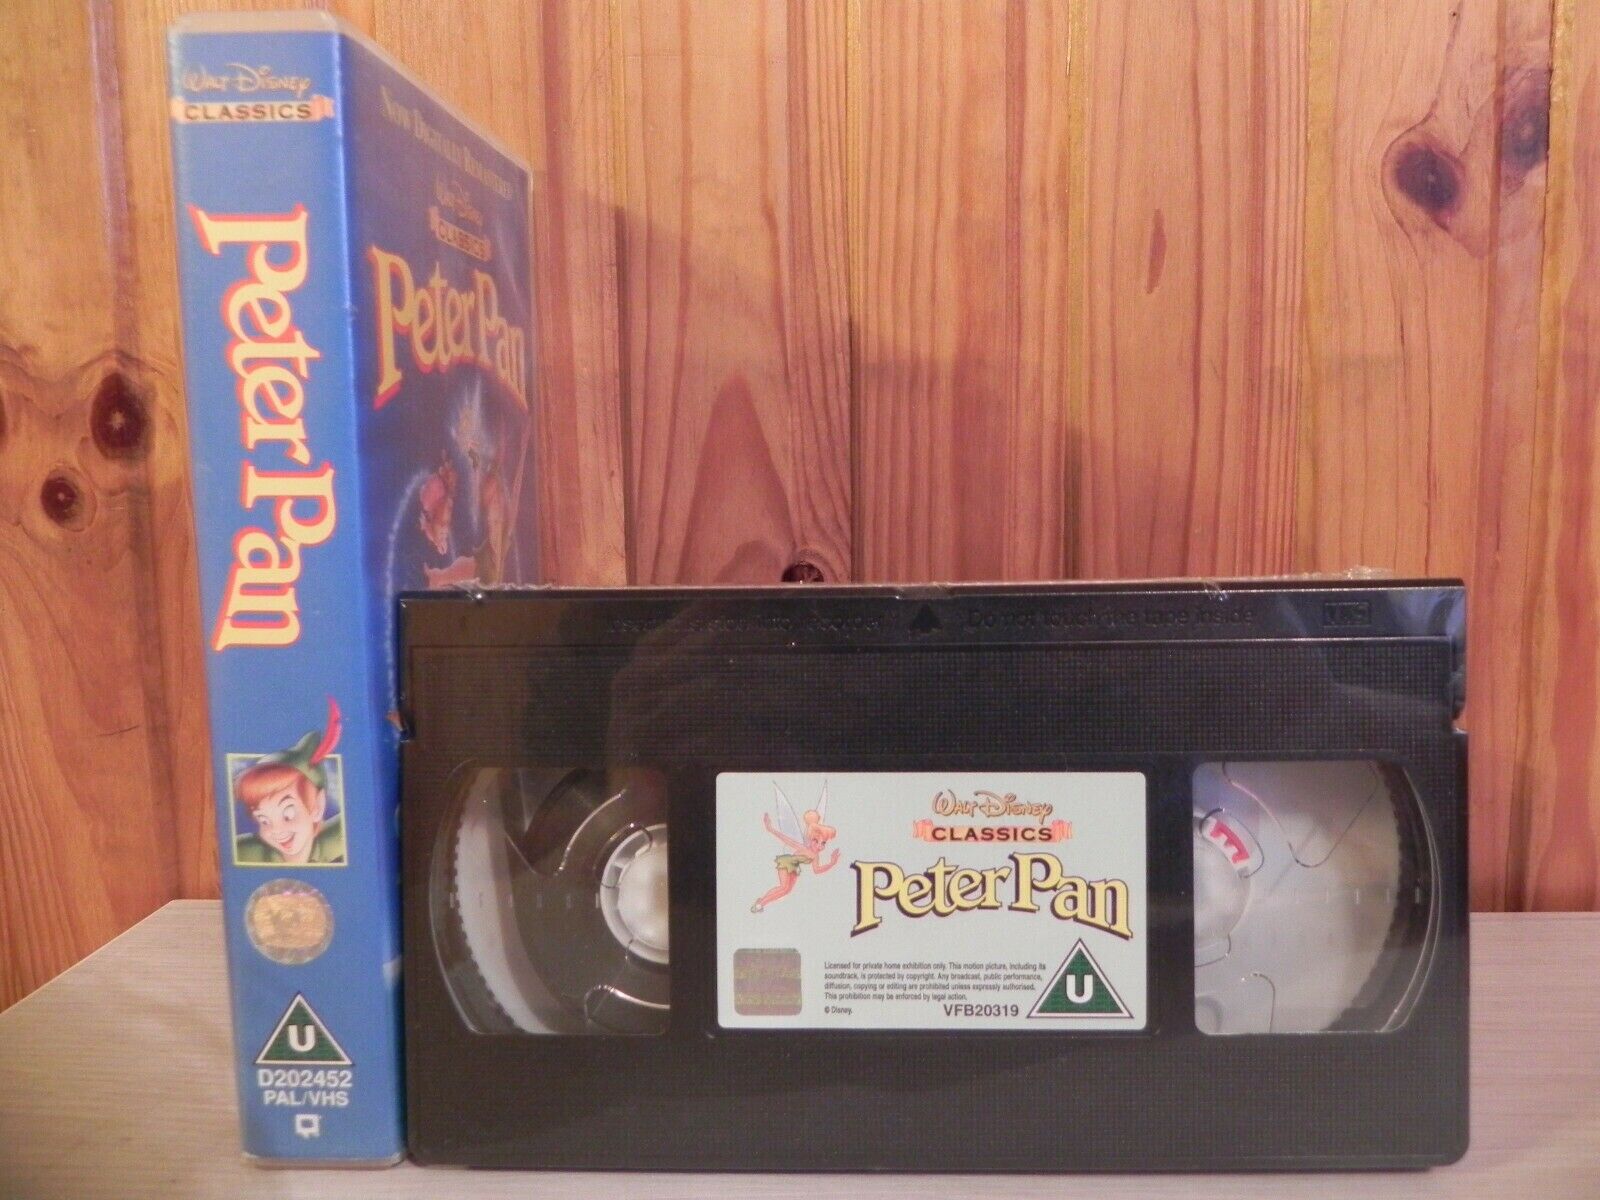 New - Peter Pan - Walt Disney Video - Classic - Still Sealed - 202452 - Pal VHS-